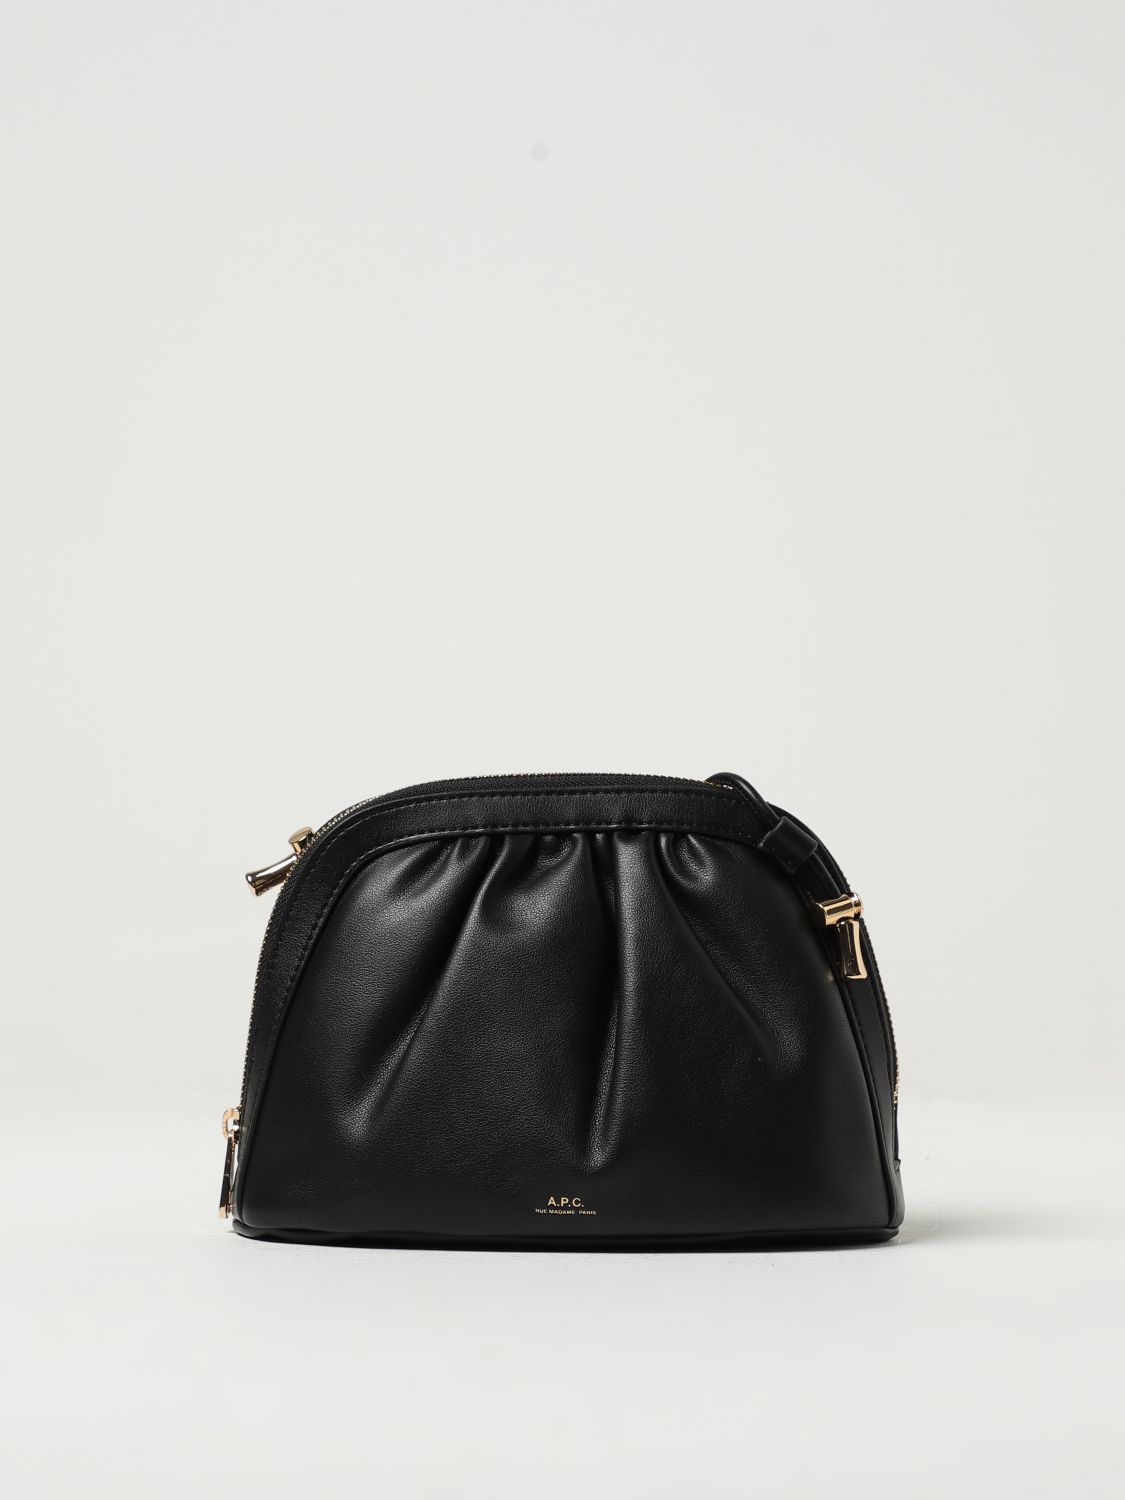 Apc Handbag A.p.c. Woman Colour Black